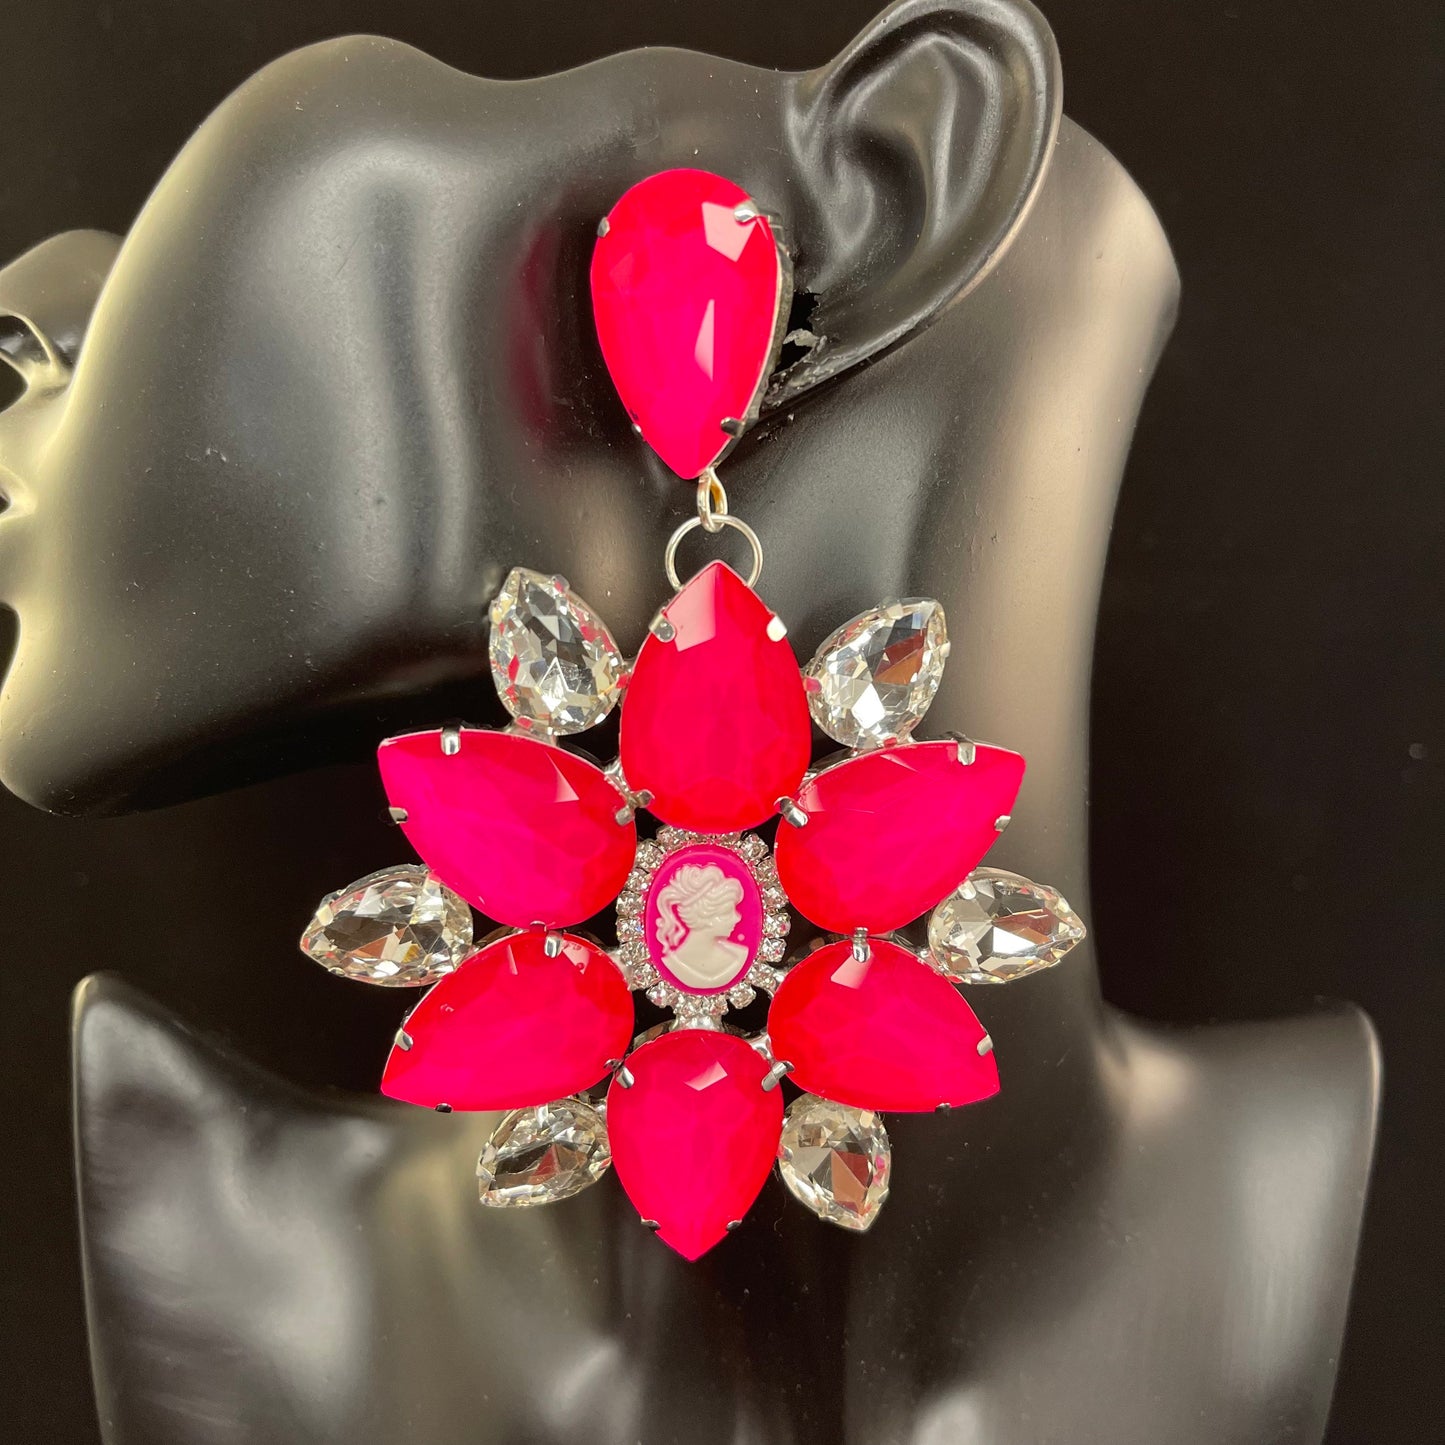 Neon Cameo Earrings / Clip On or Pierced / Statement Earrings / Crystal Jewelry / Dress Earrings / Drag Queen / phantom of the opera